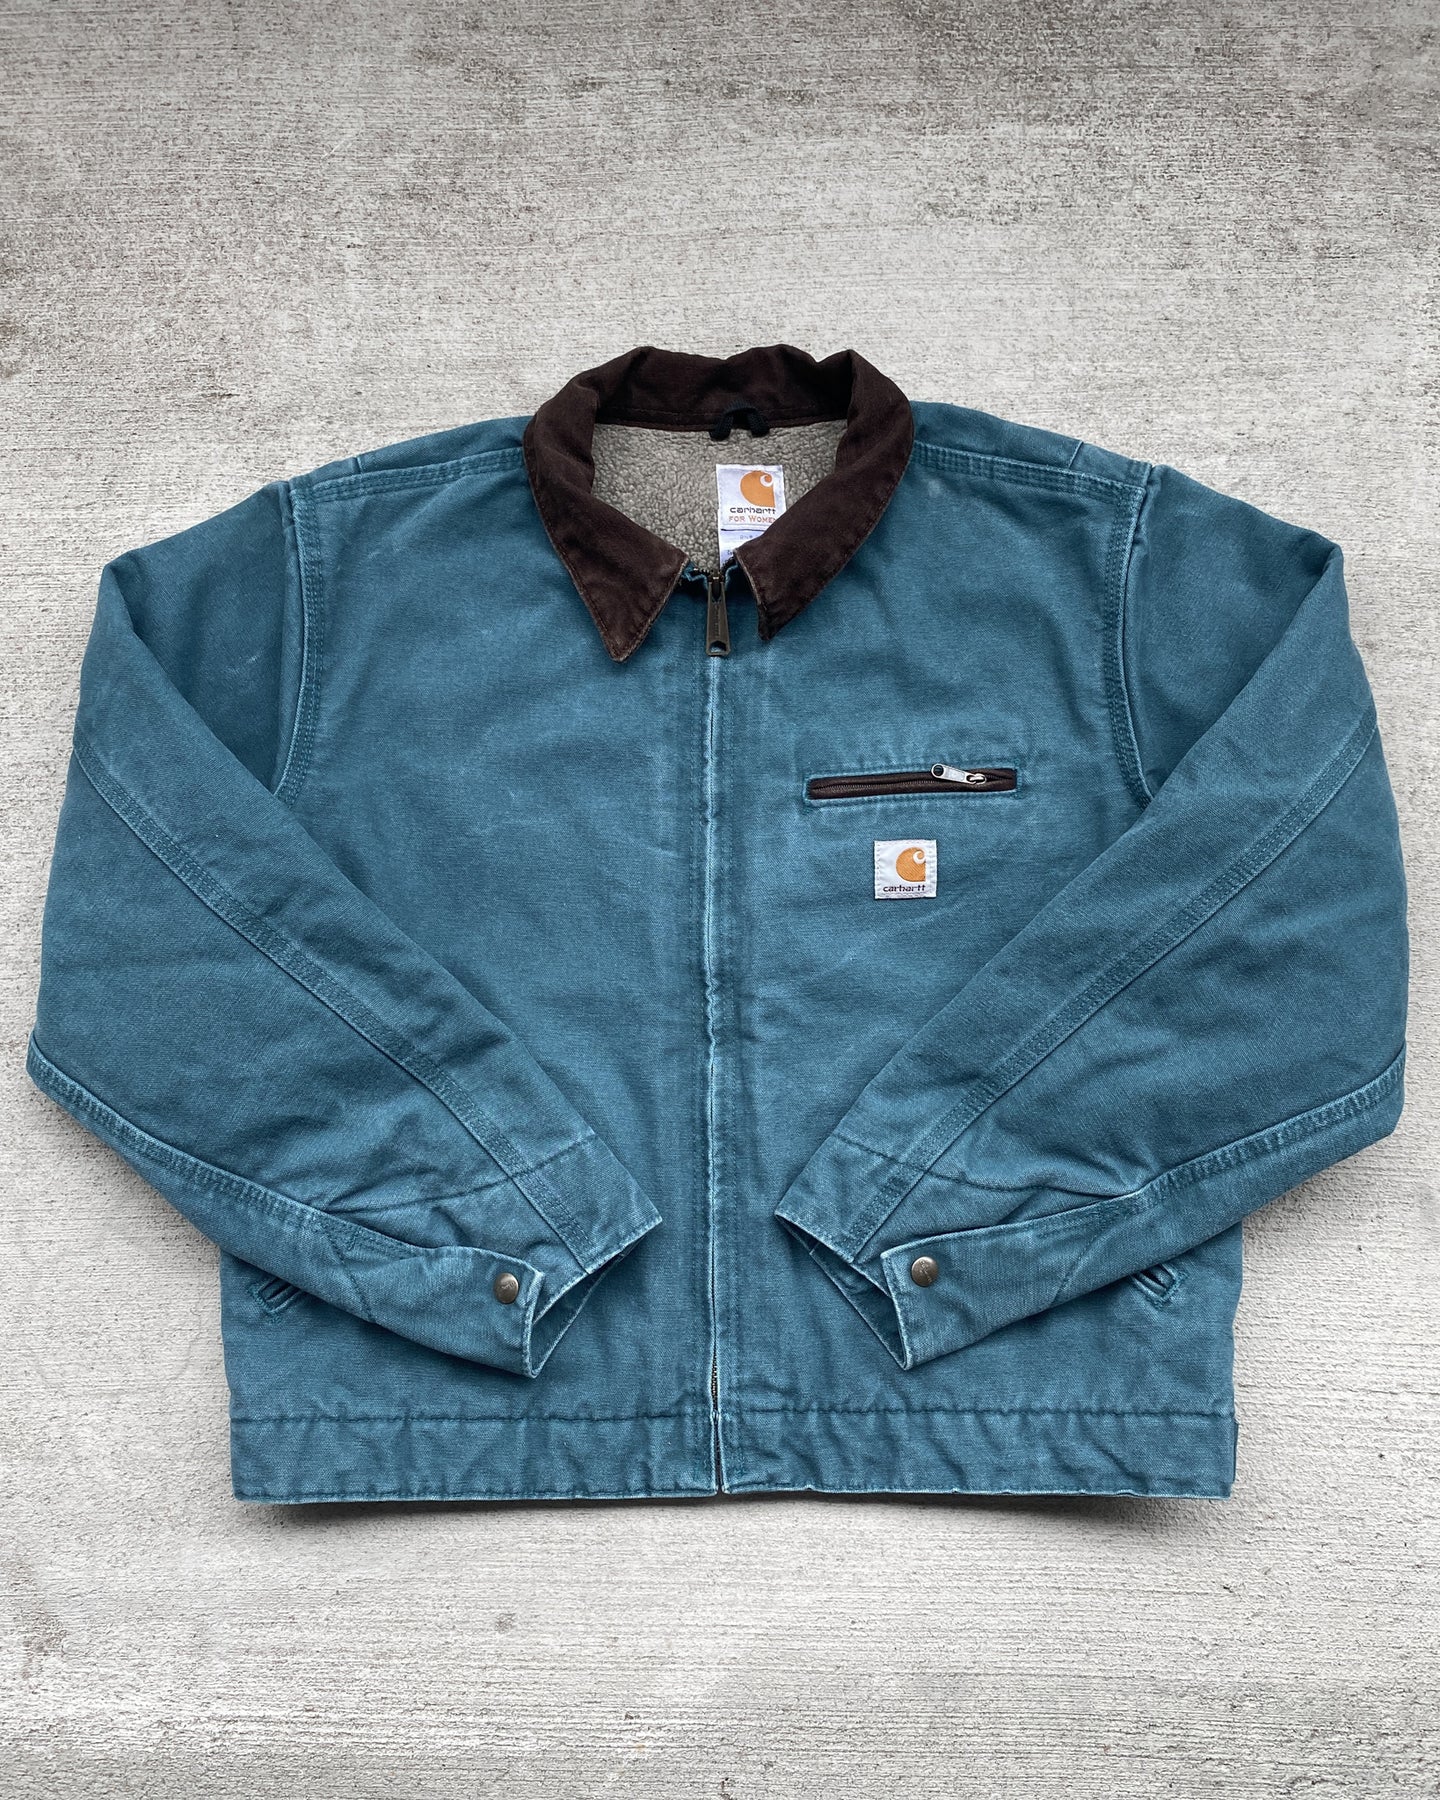 Carhartt Deep Turquoise Detroit Jacket - Size Medium